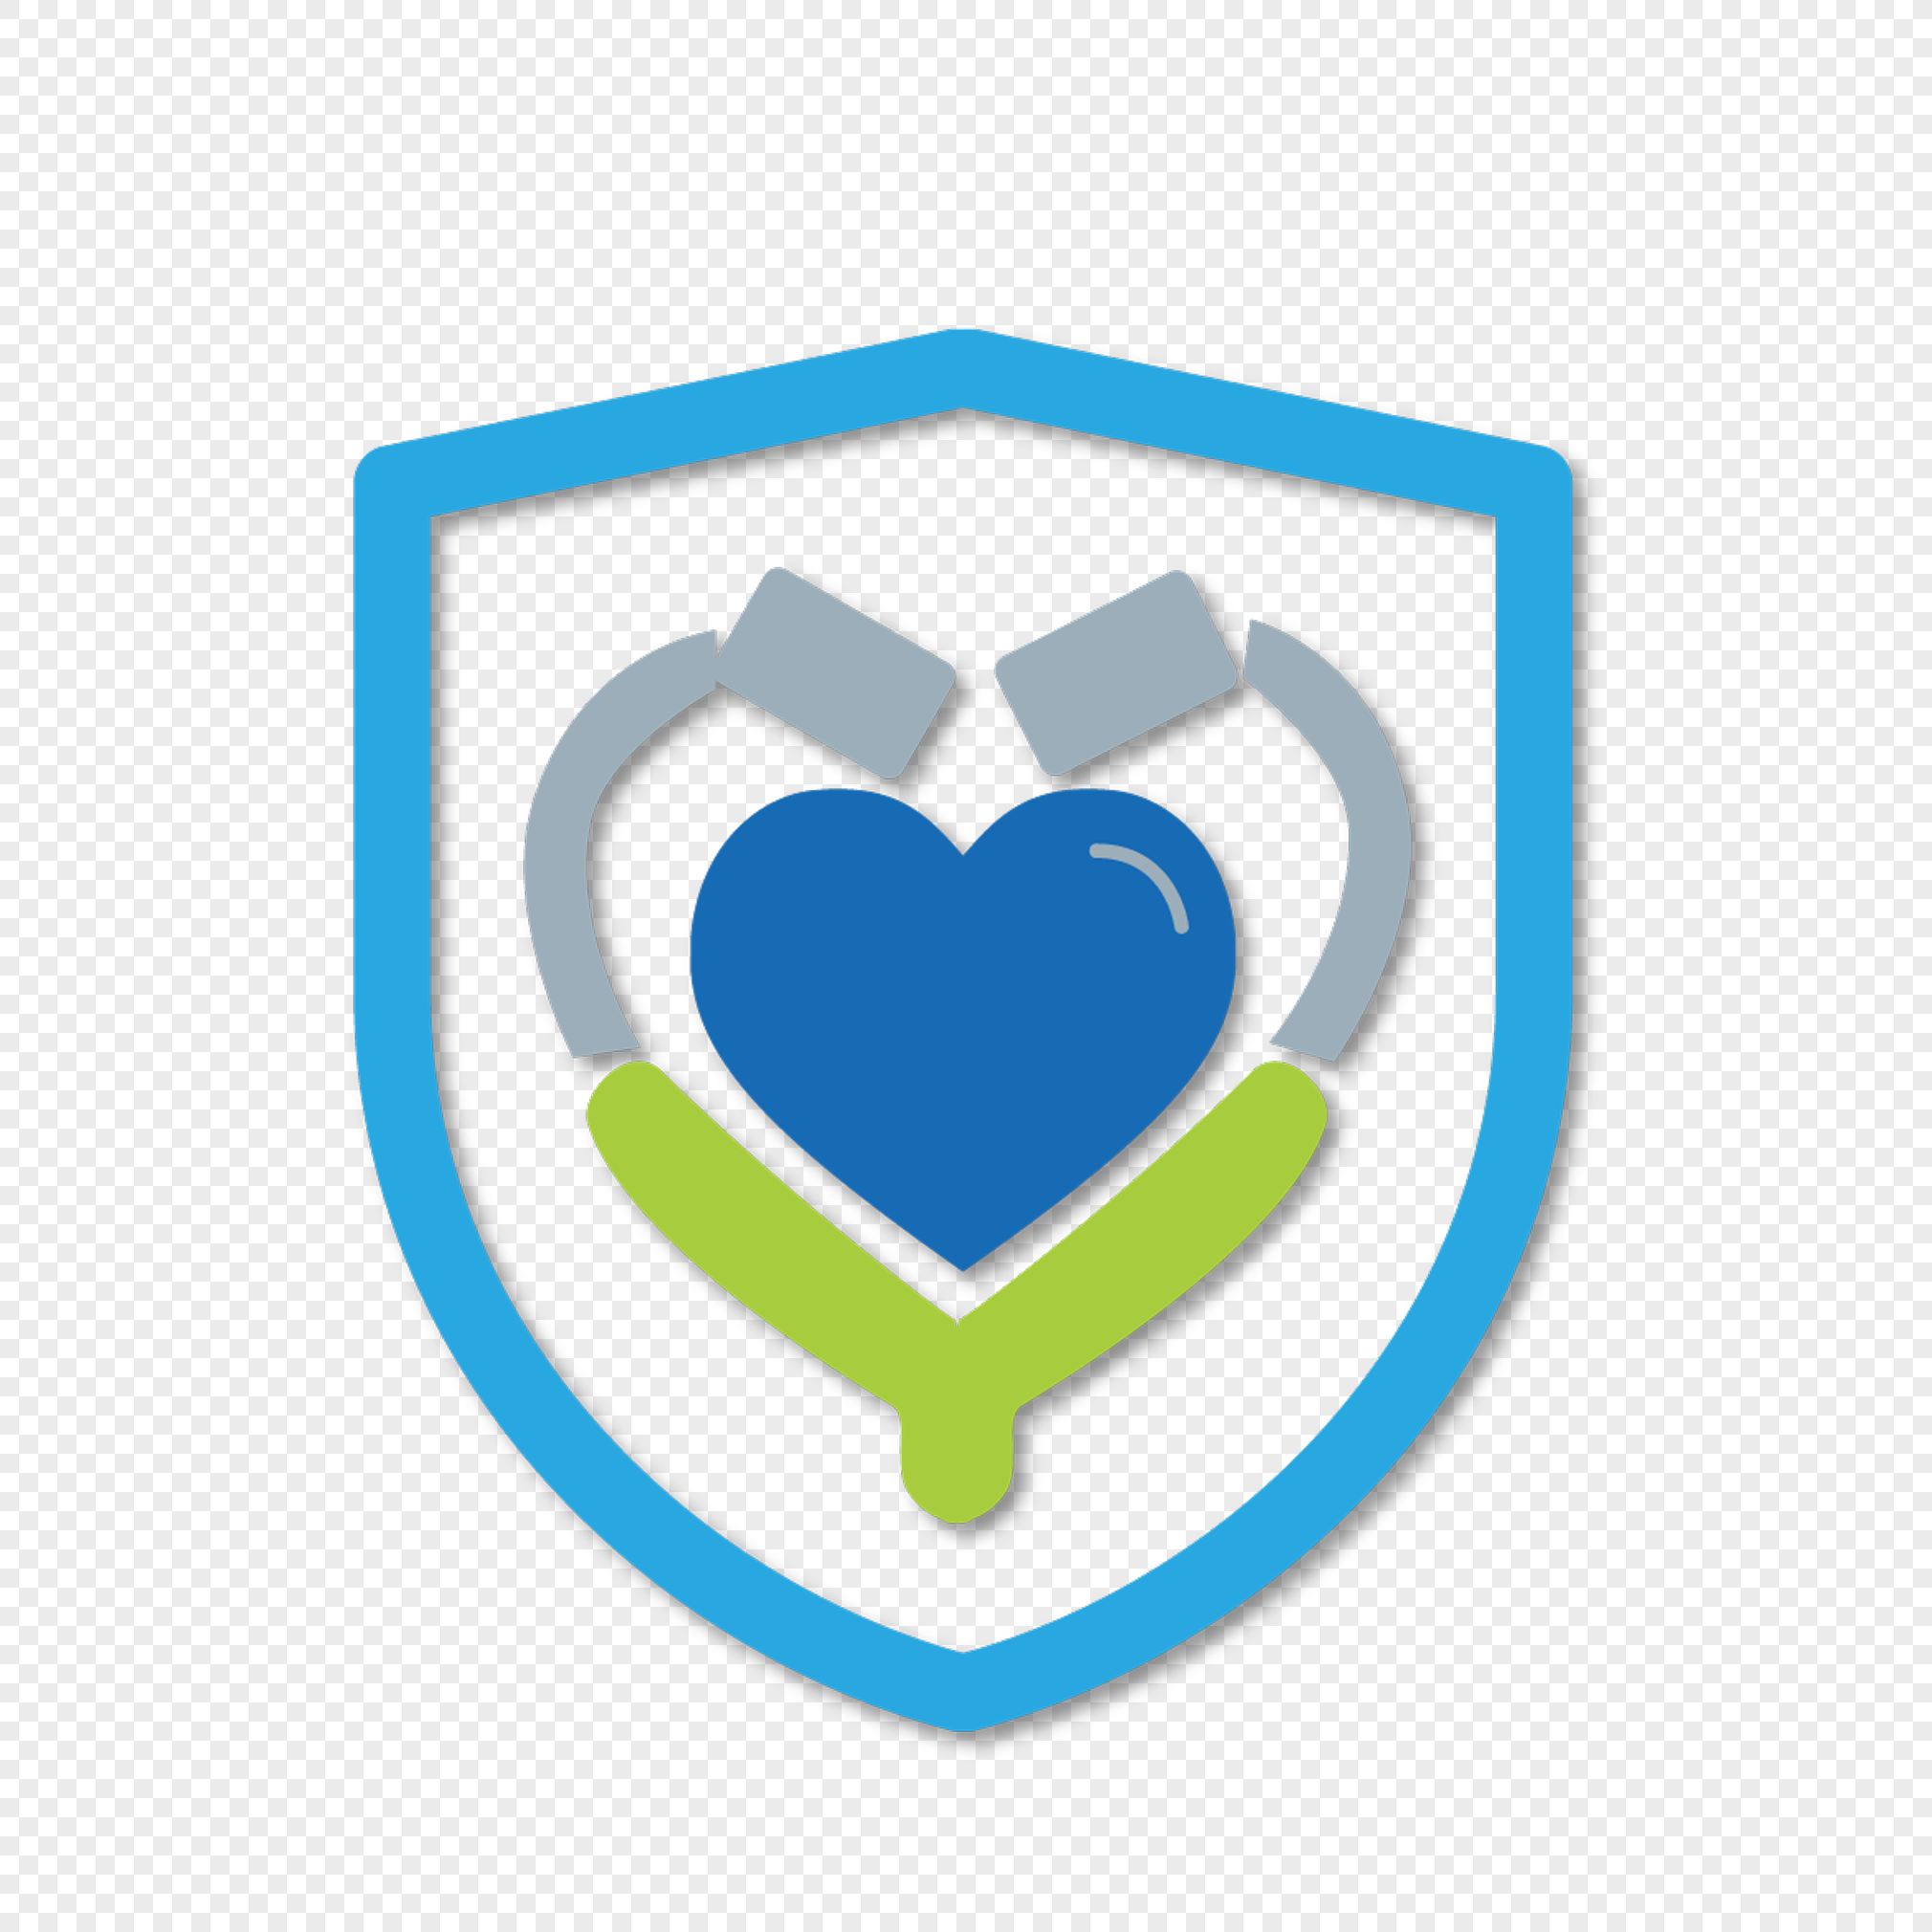 100,000 Medical heart logo Vector Images | Depositphotos